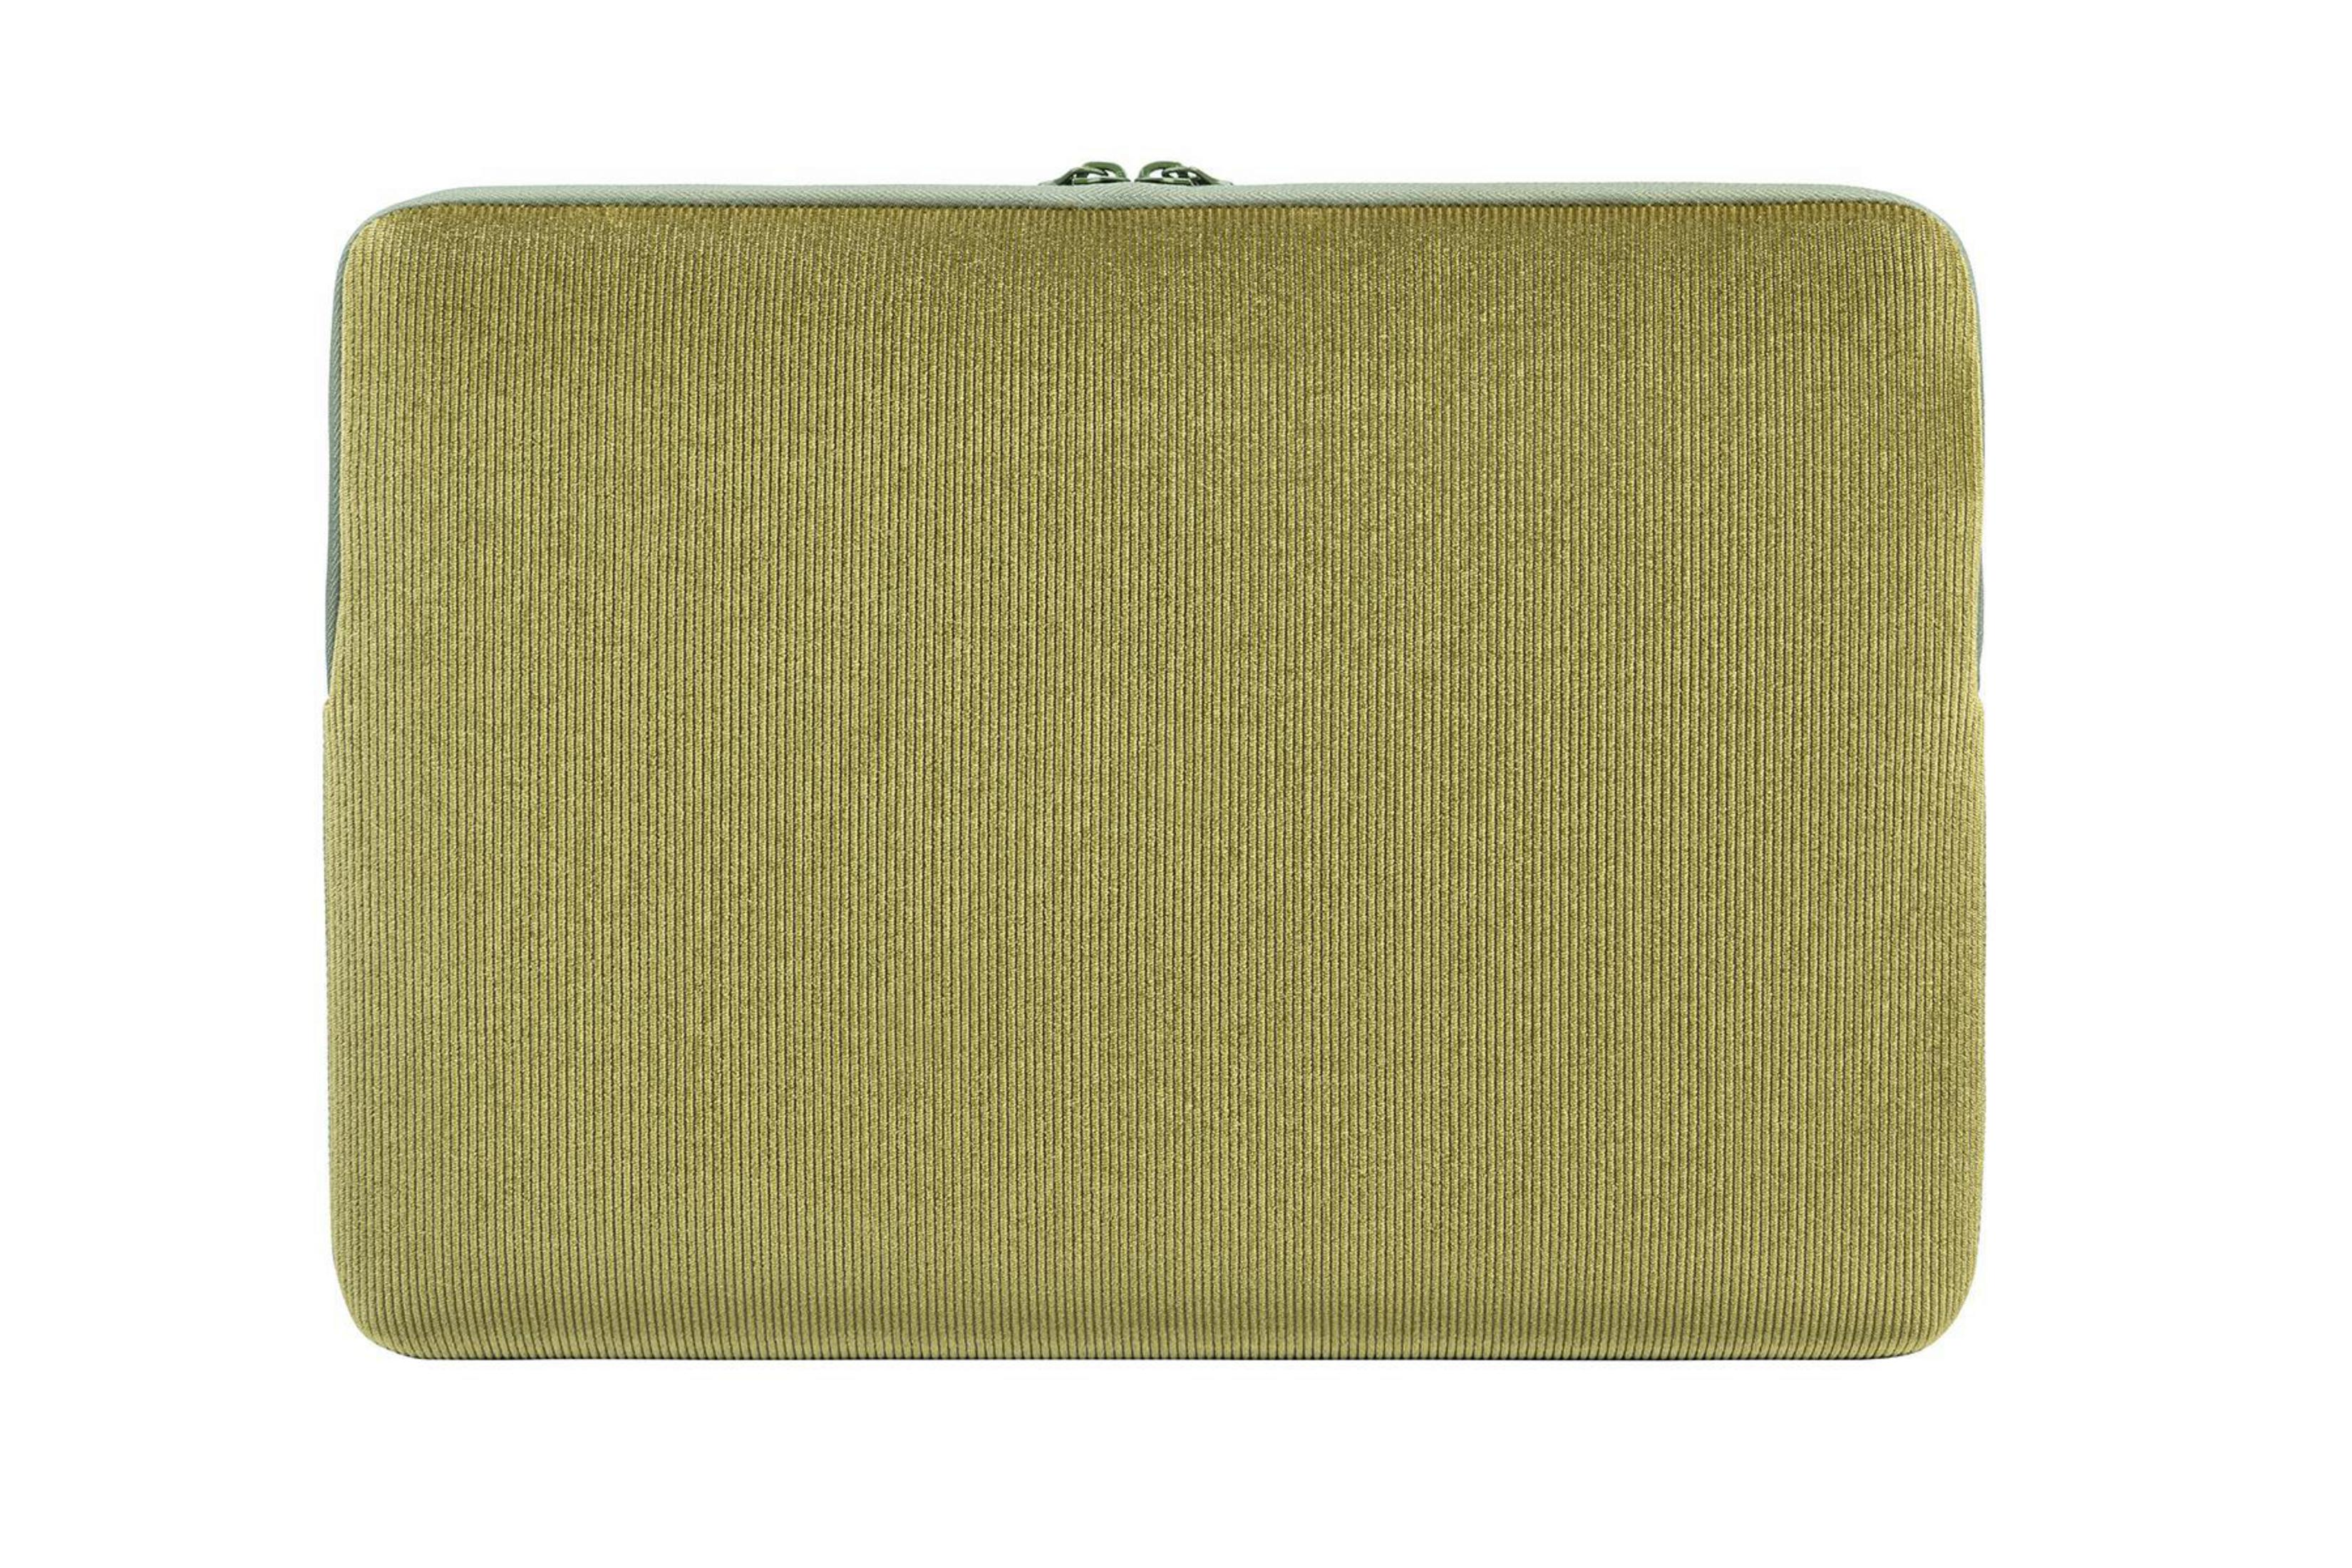 TUCANO BFVELMB16-V SLEEVE 15,6 GRUEN Notebooktasche Grün für Sleeve Neopren, Cord, Apple